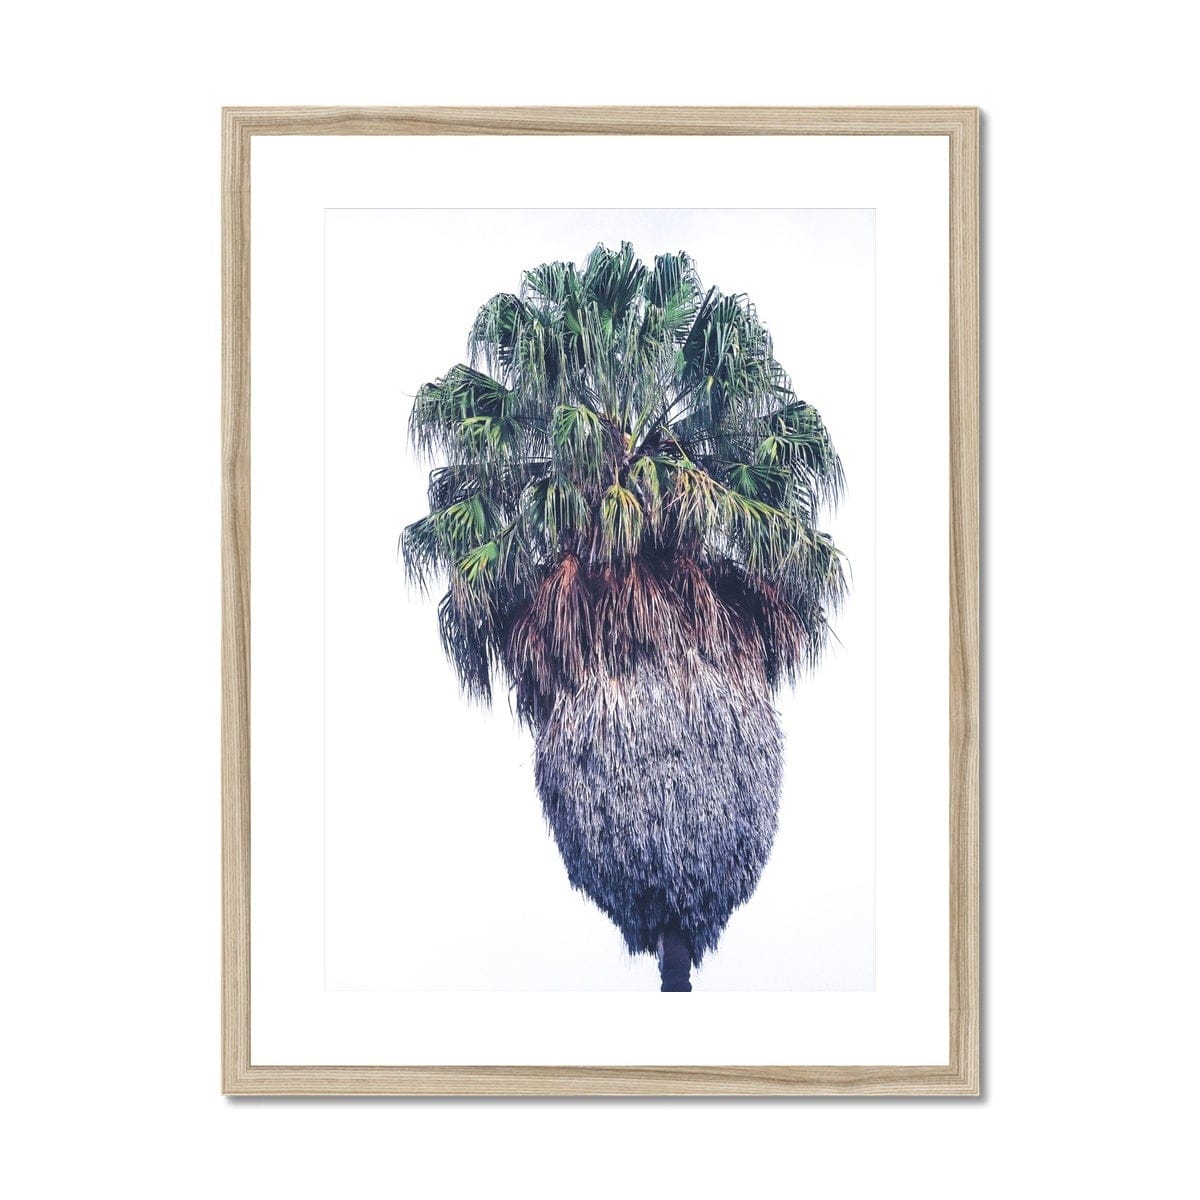 Adam Davies Framed A4 Portrait (21x29.7cm) / Natural Frame Vaucluse Palm Tree Framed & Mounted Print